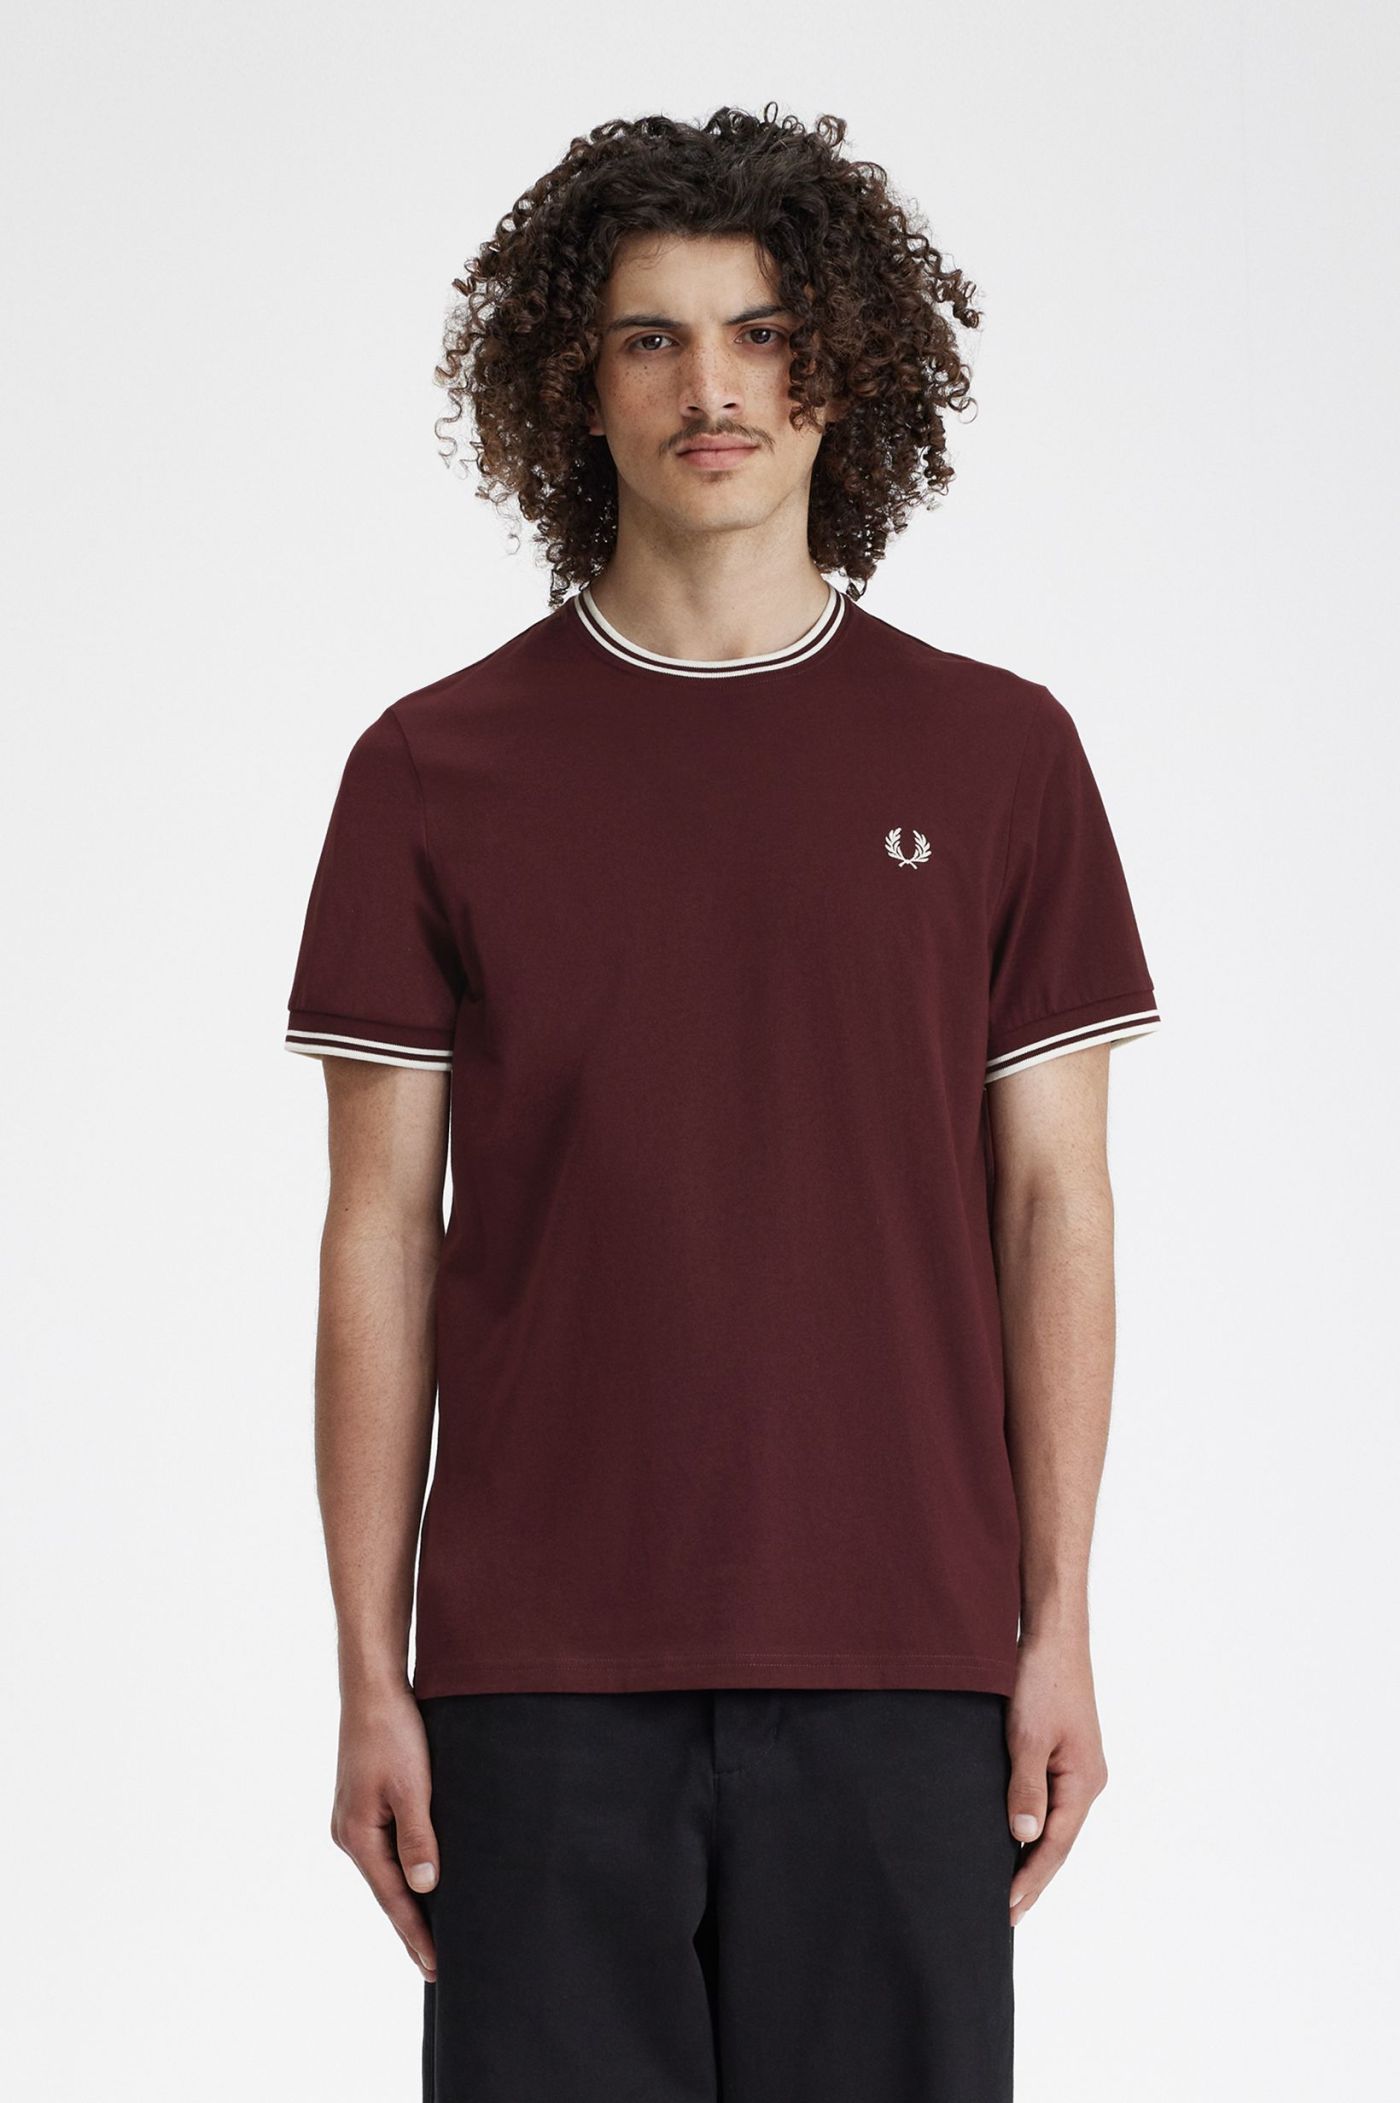 Twin Tipped T-Shirt - Oxblood | Men's T-Shirts | Designer T-Shirts 